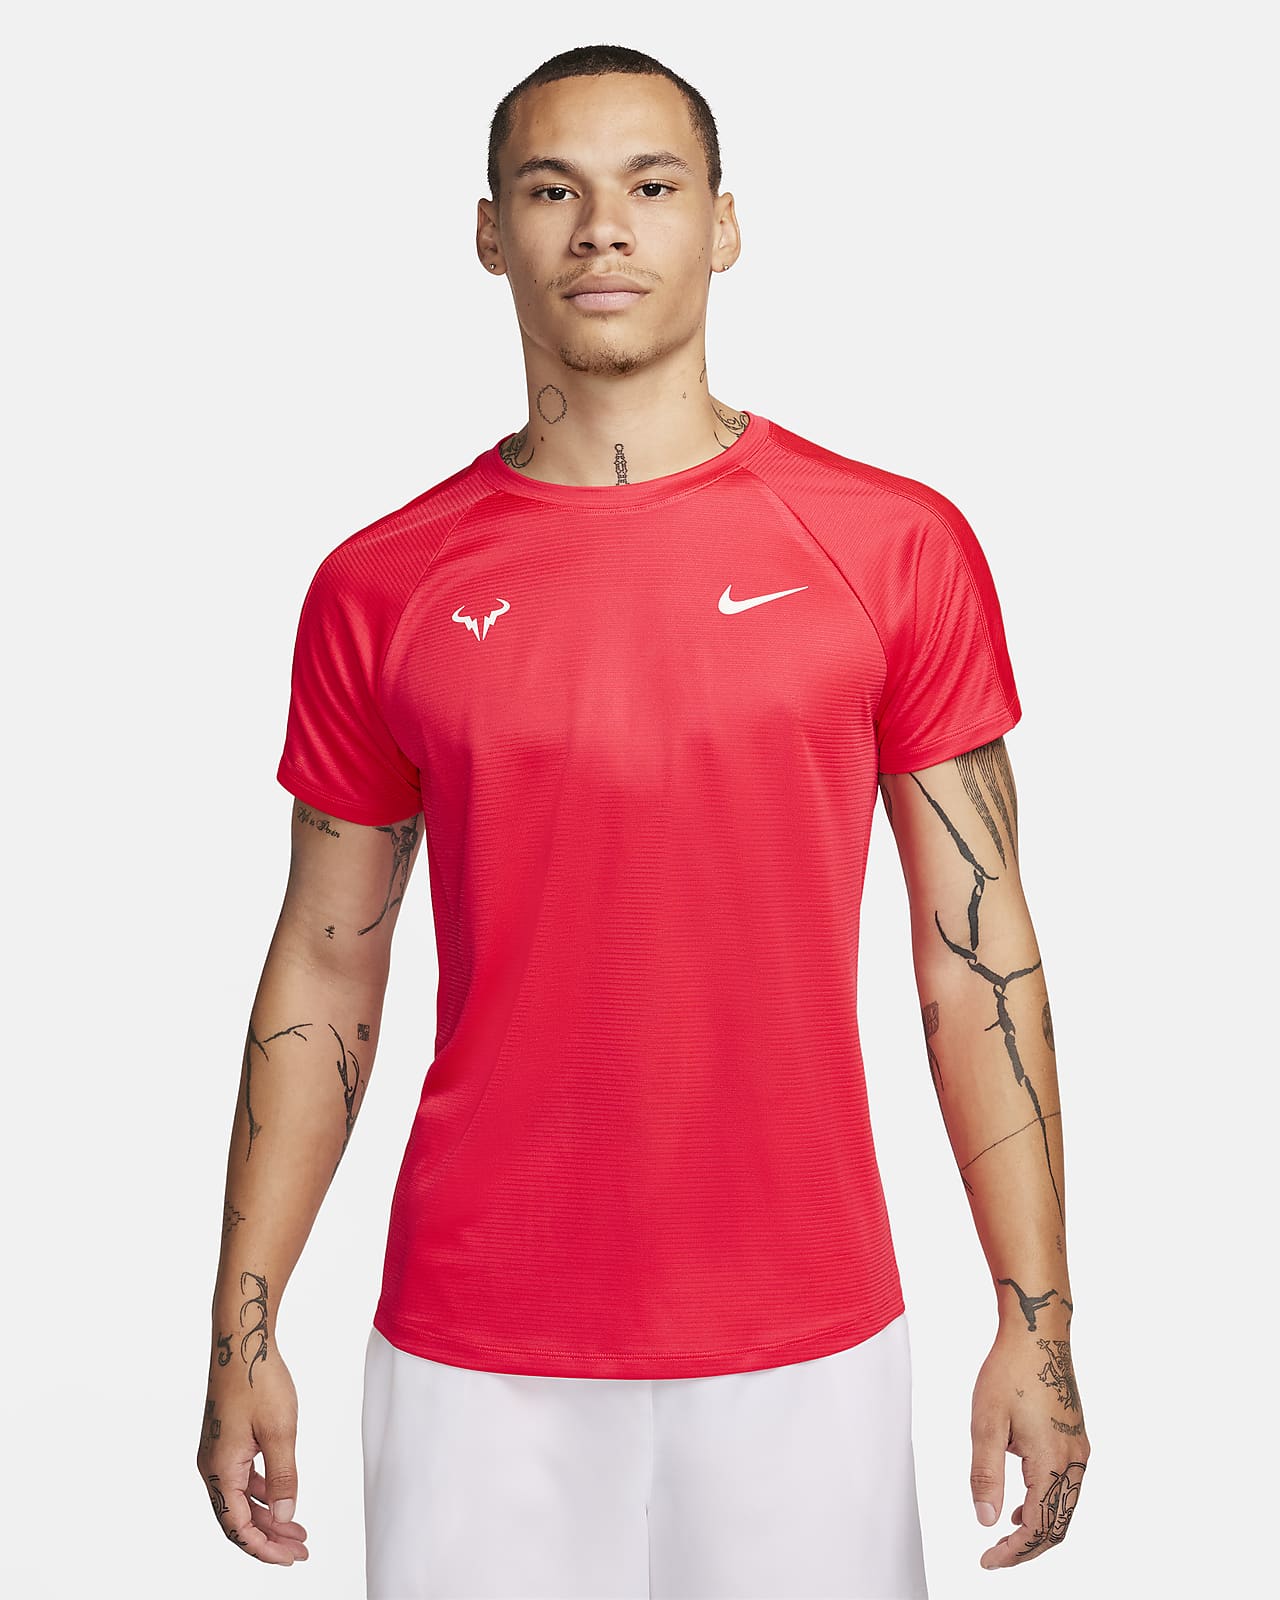 Rafa Challenger Men's Nike Dri-FIT Short-Sleeve Tennis Top